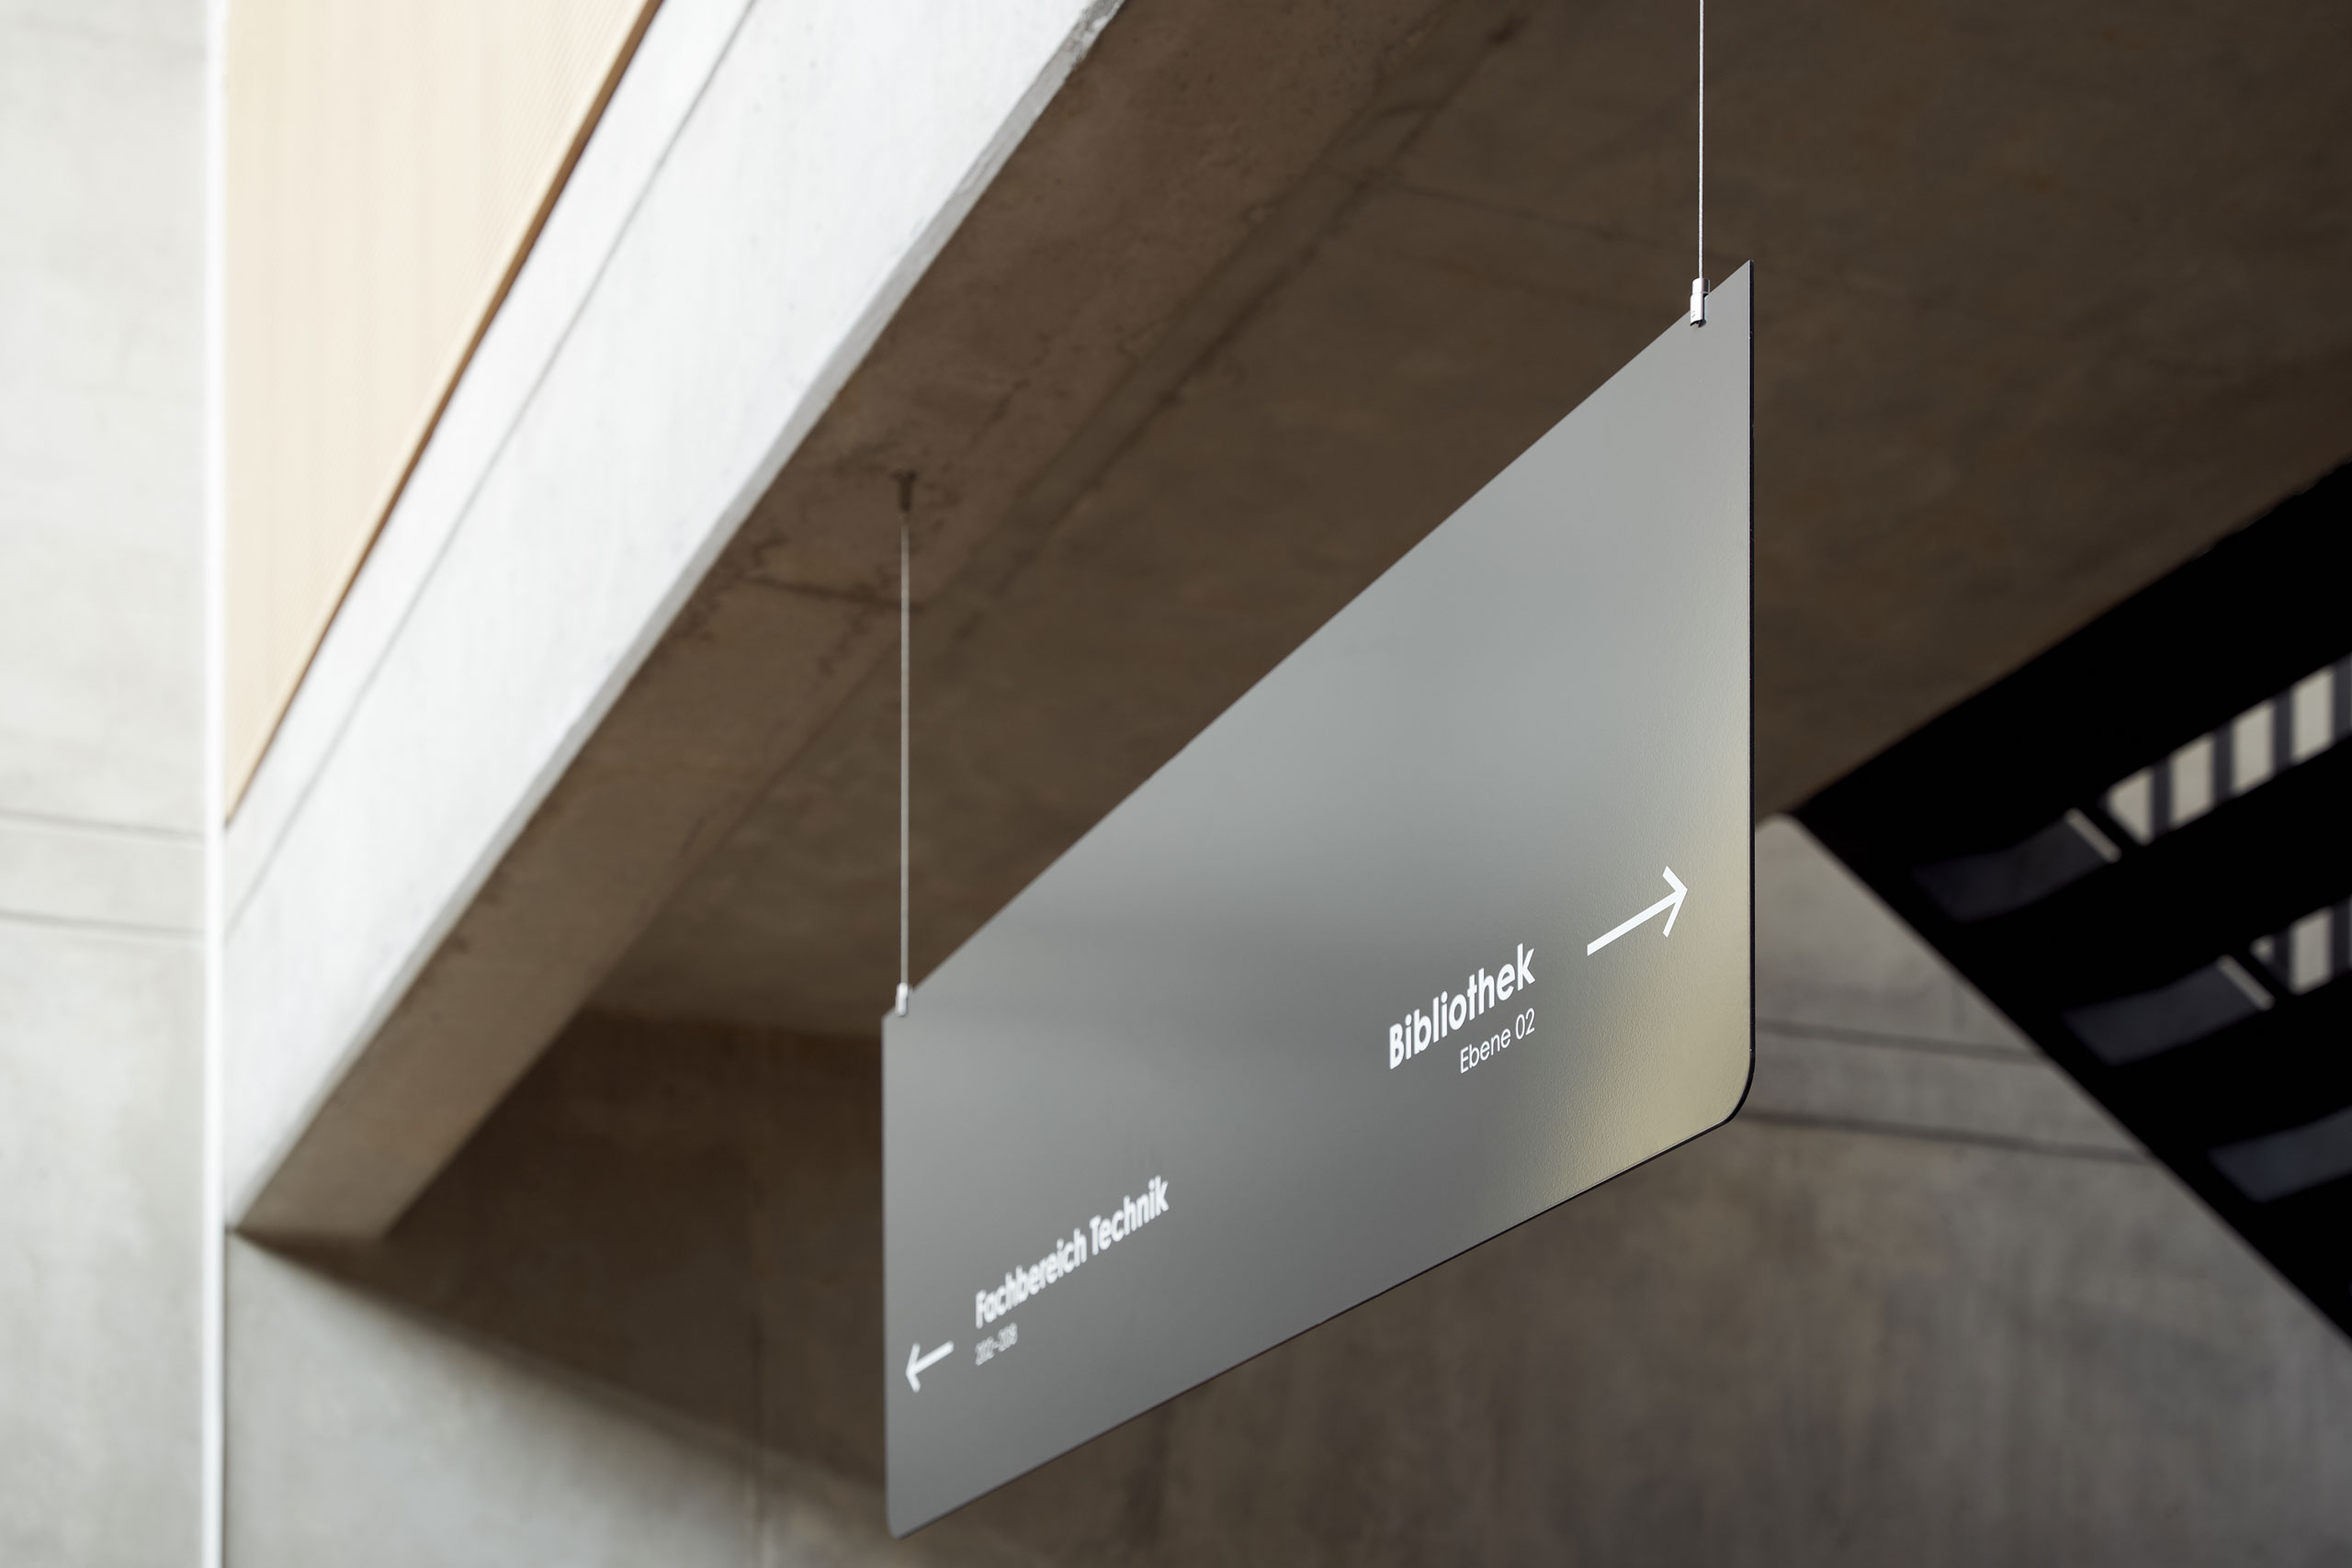 atelier-522-bzm-signaletik-ceiling-sign-2